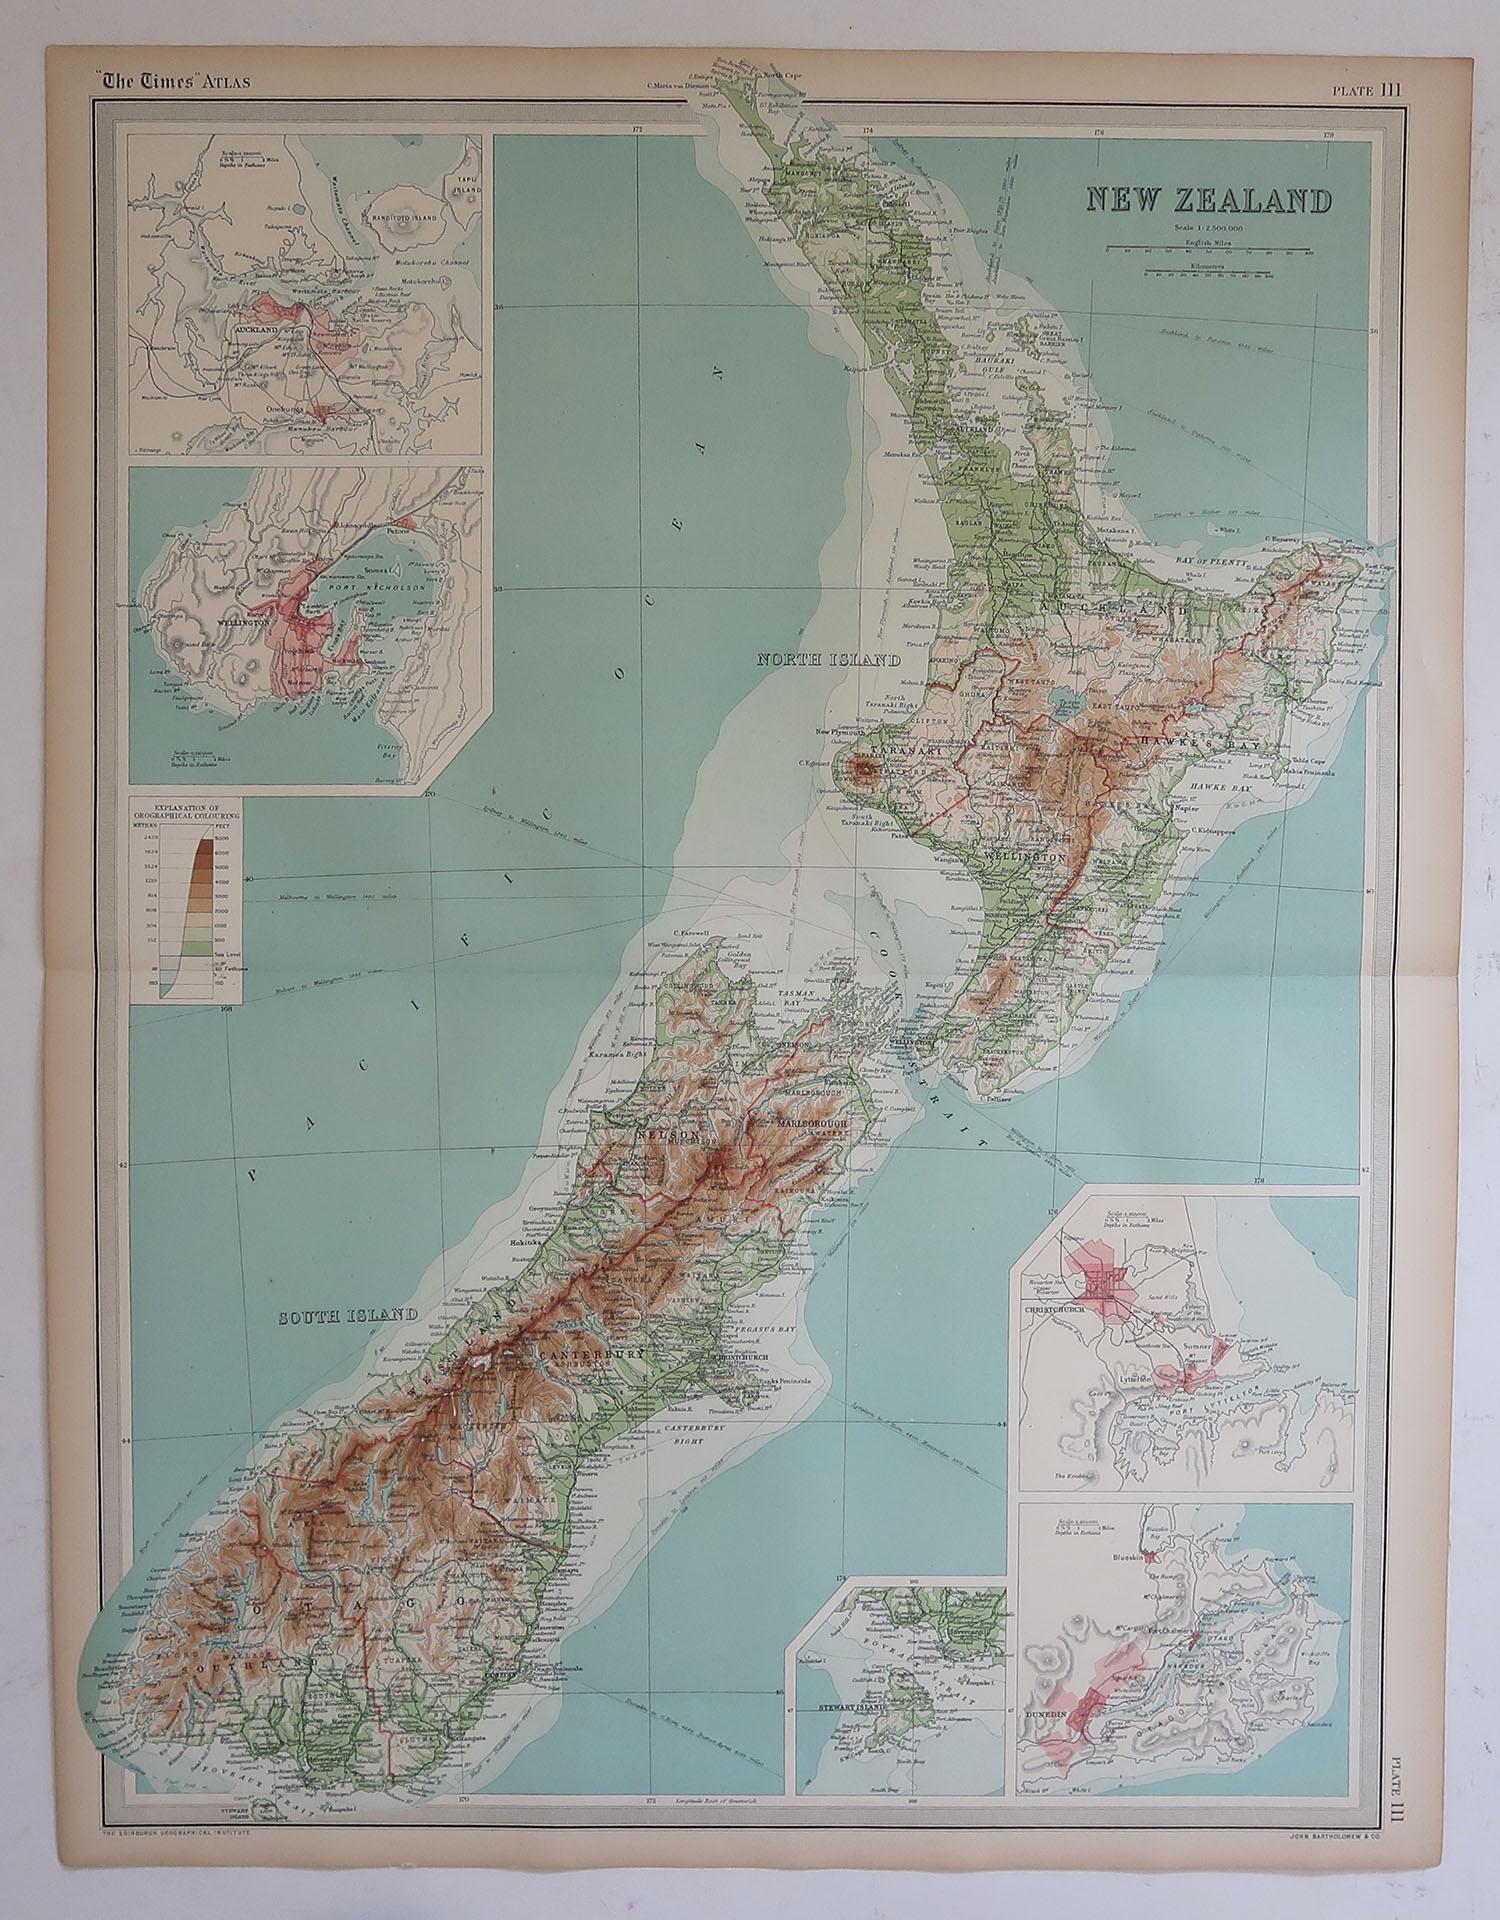 Other Large Original Antique Map of New Zealand by Bartholomew, circa 1920